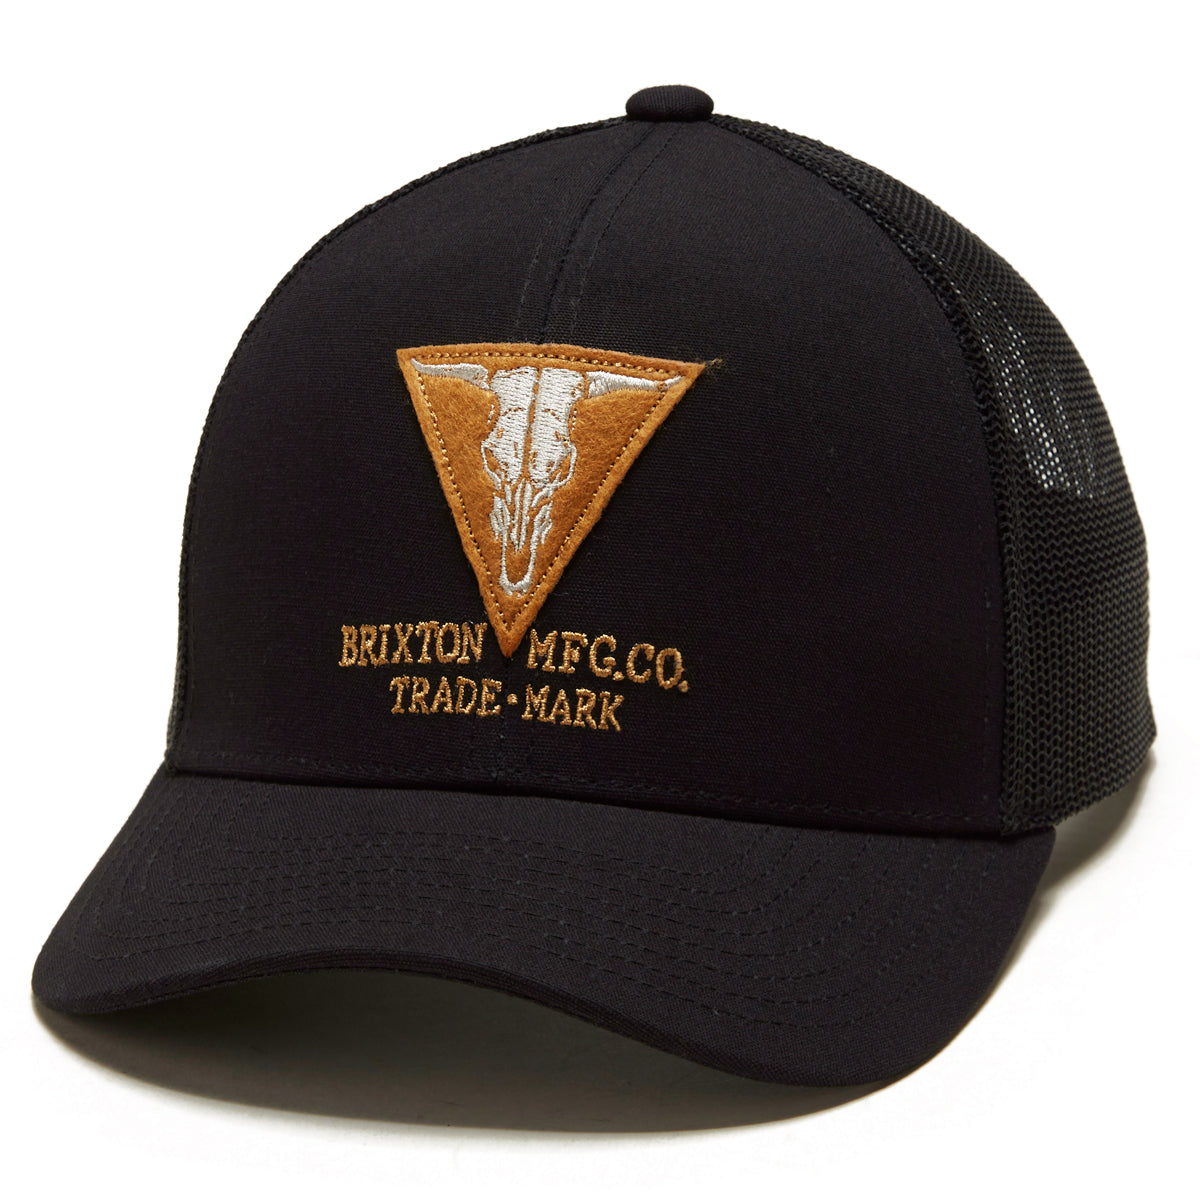 Brixton Gunston Netplus Mp Trucker Hat - Black/Black image 1